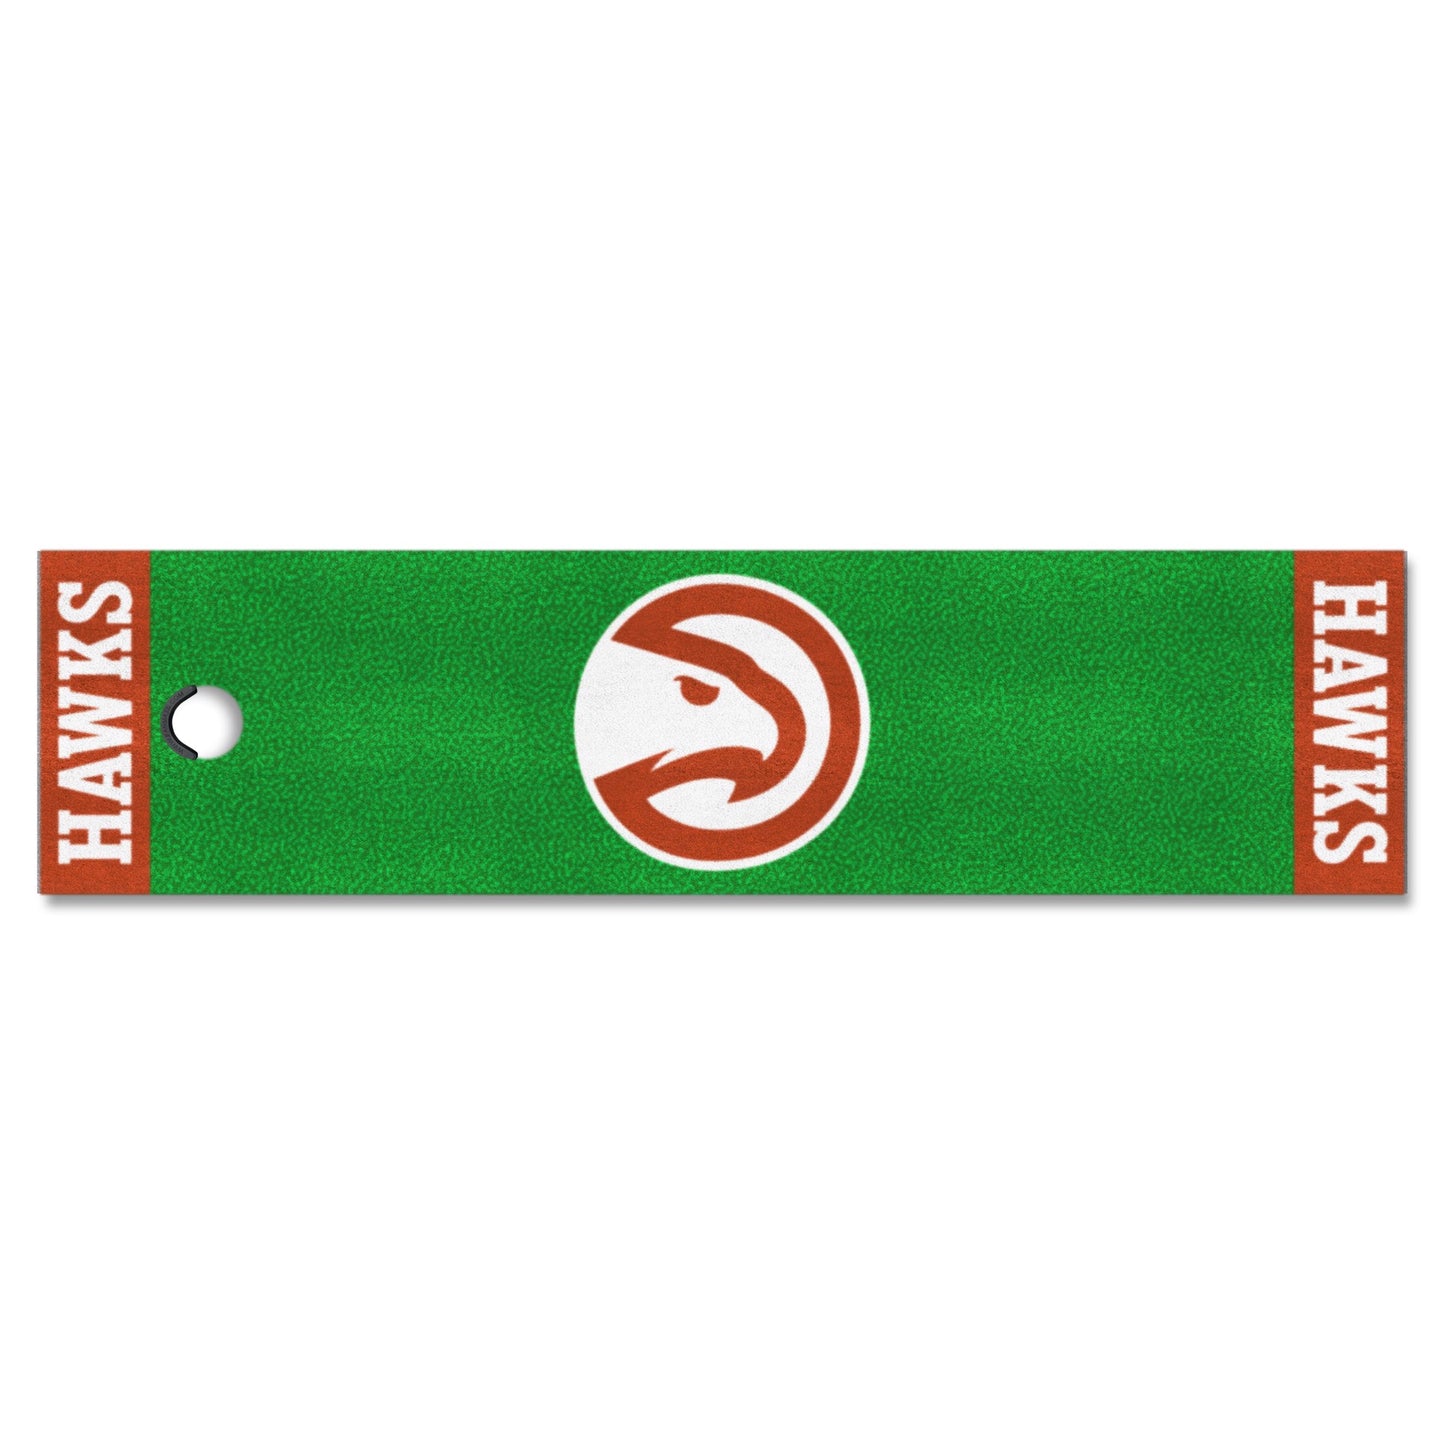 Atlanta Hawks Green Putting Mat by Fanmats